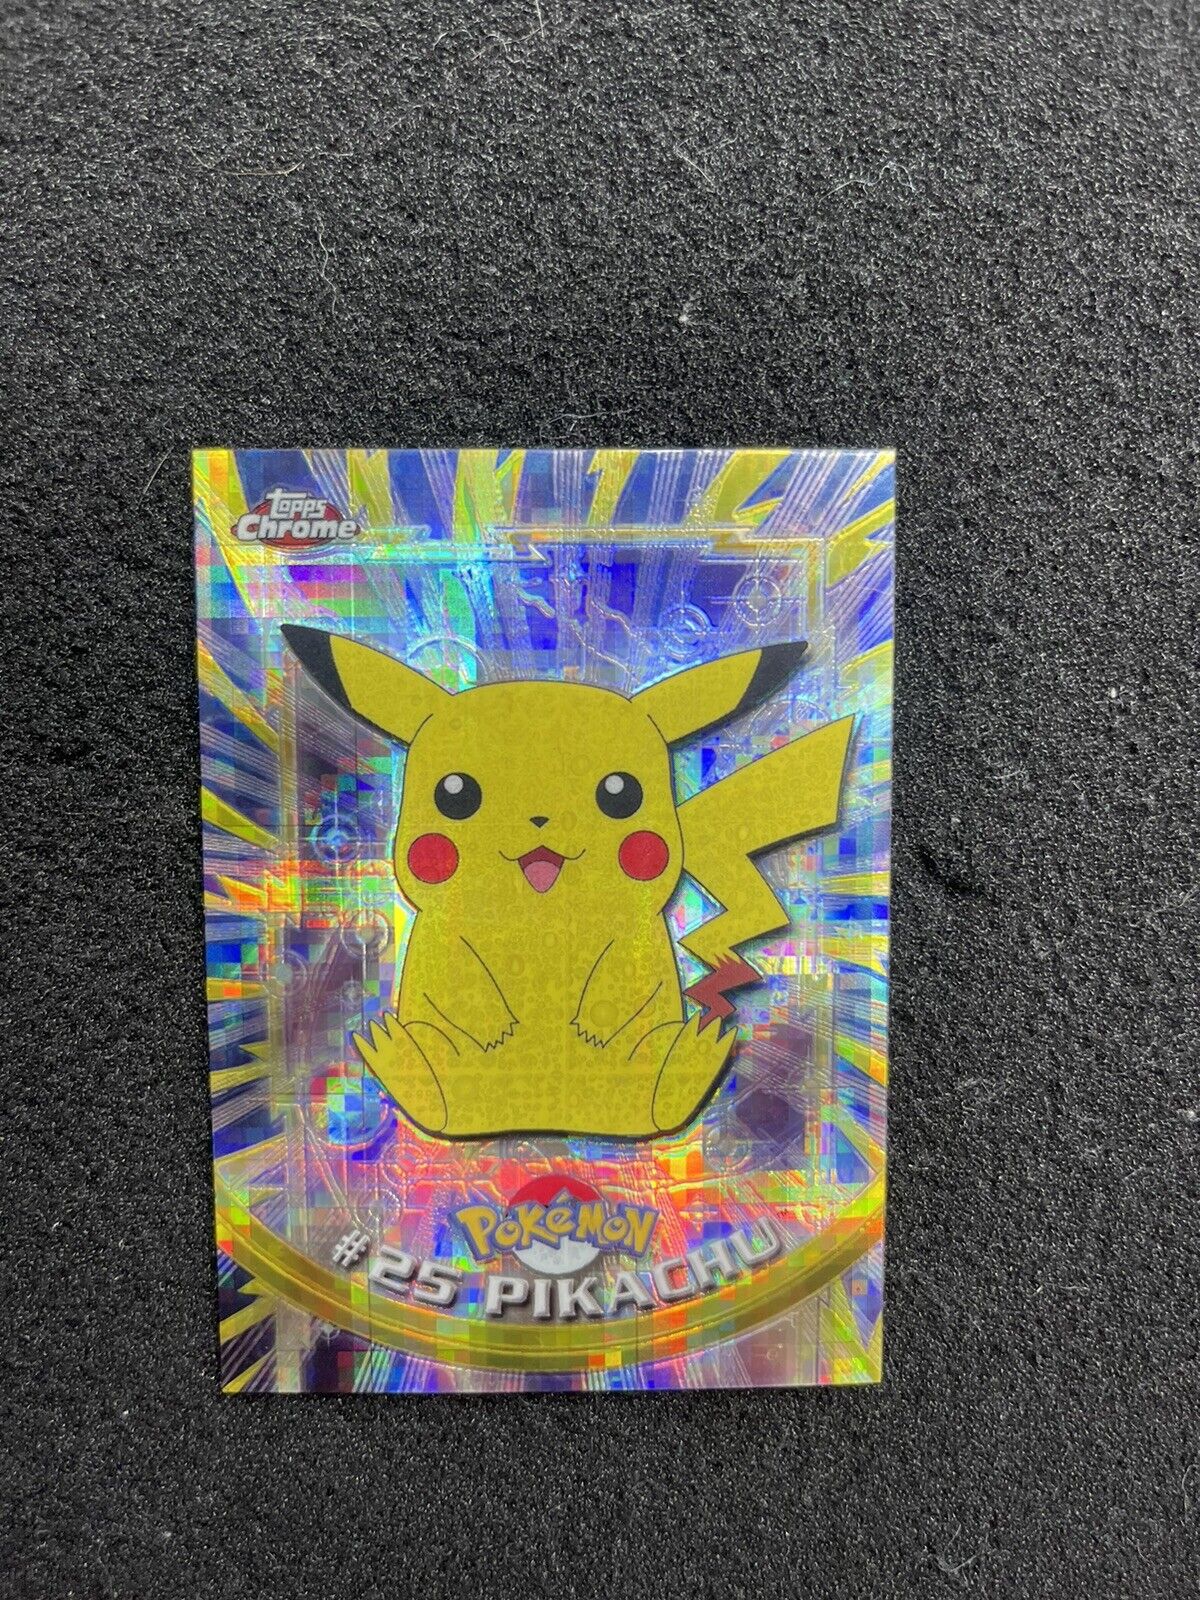 Pokemon Card - TEKNO - Pikachu #25 - 2000 Topps Chrome Series 1 Front Is Mint